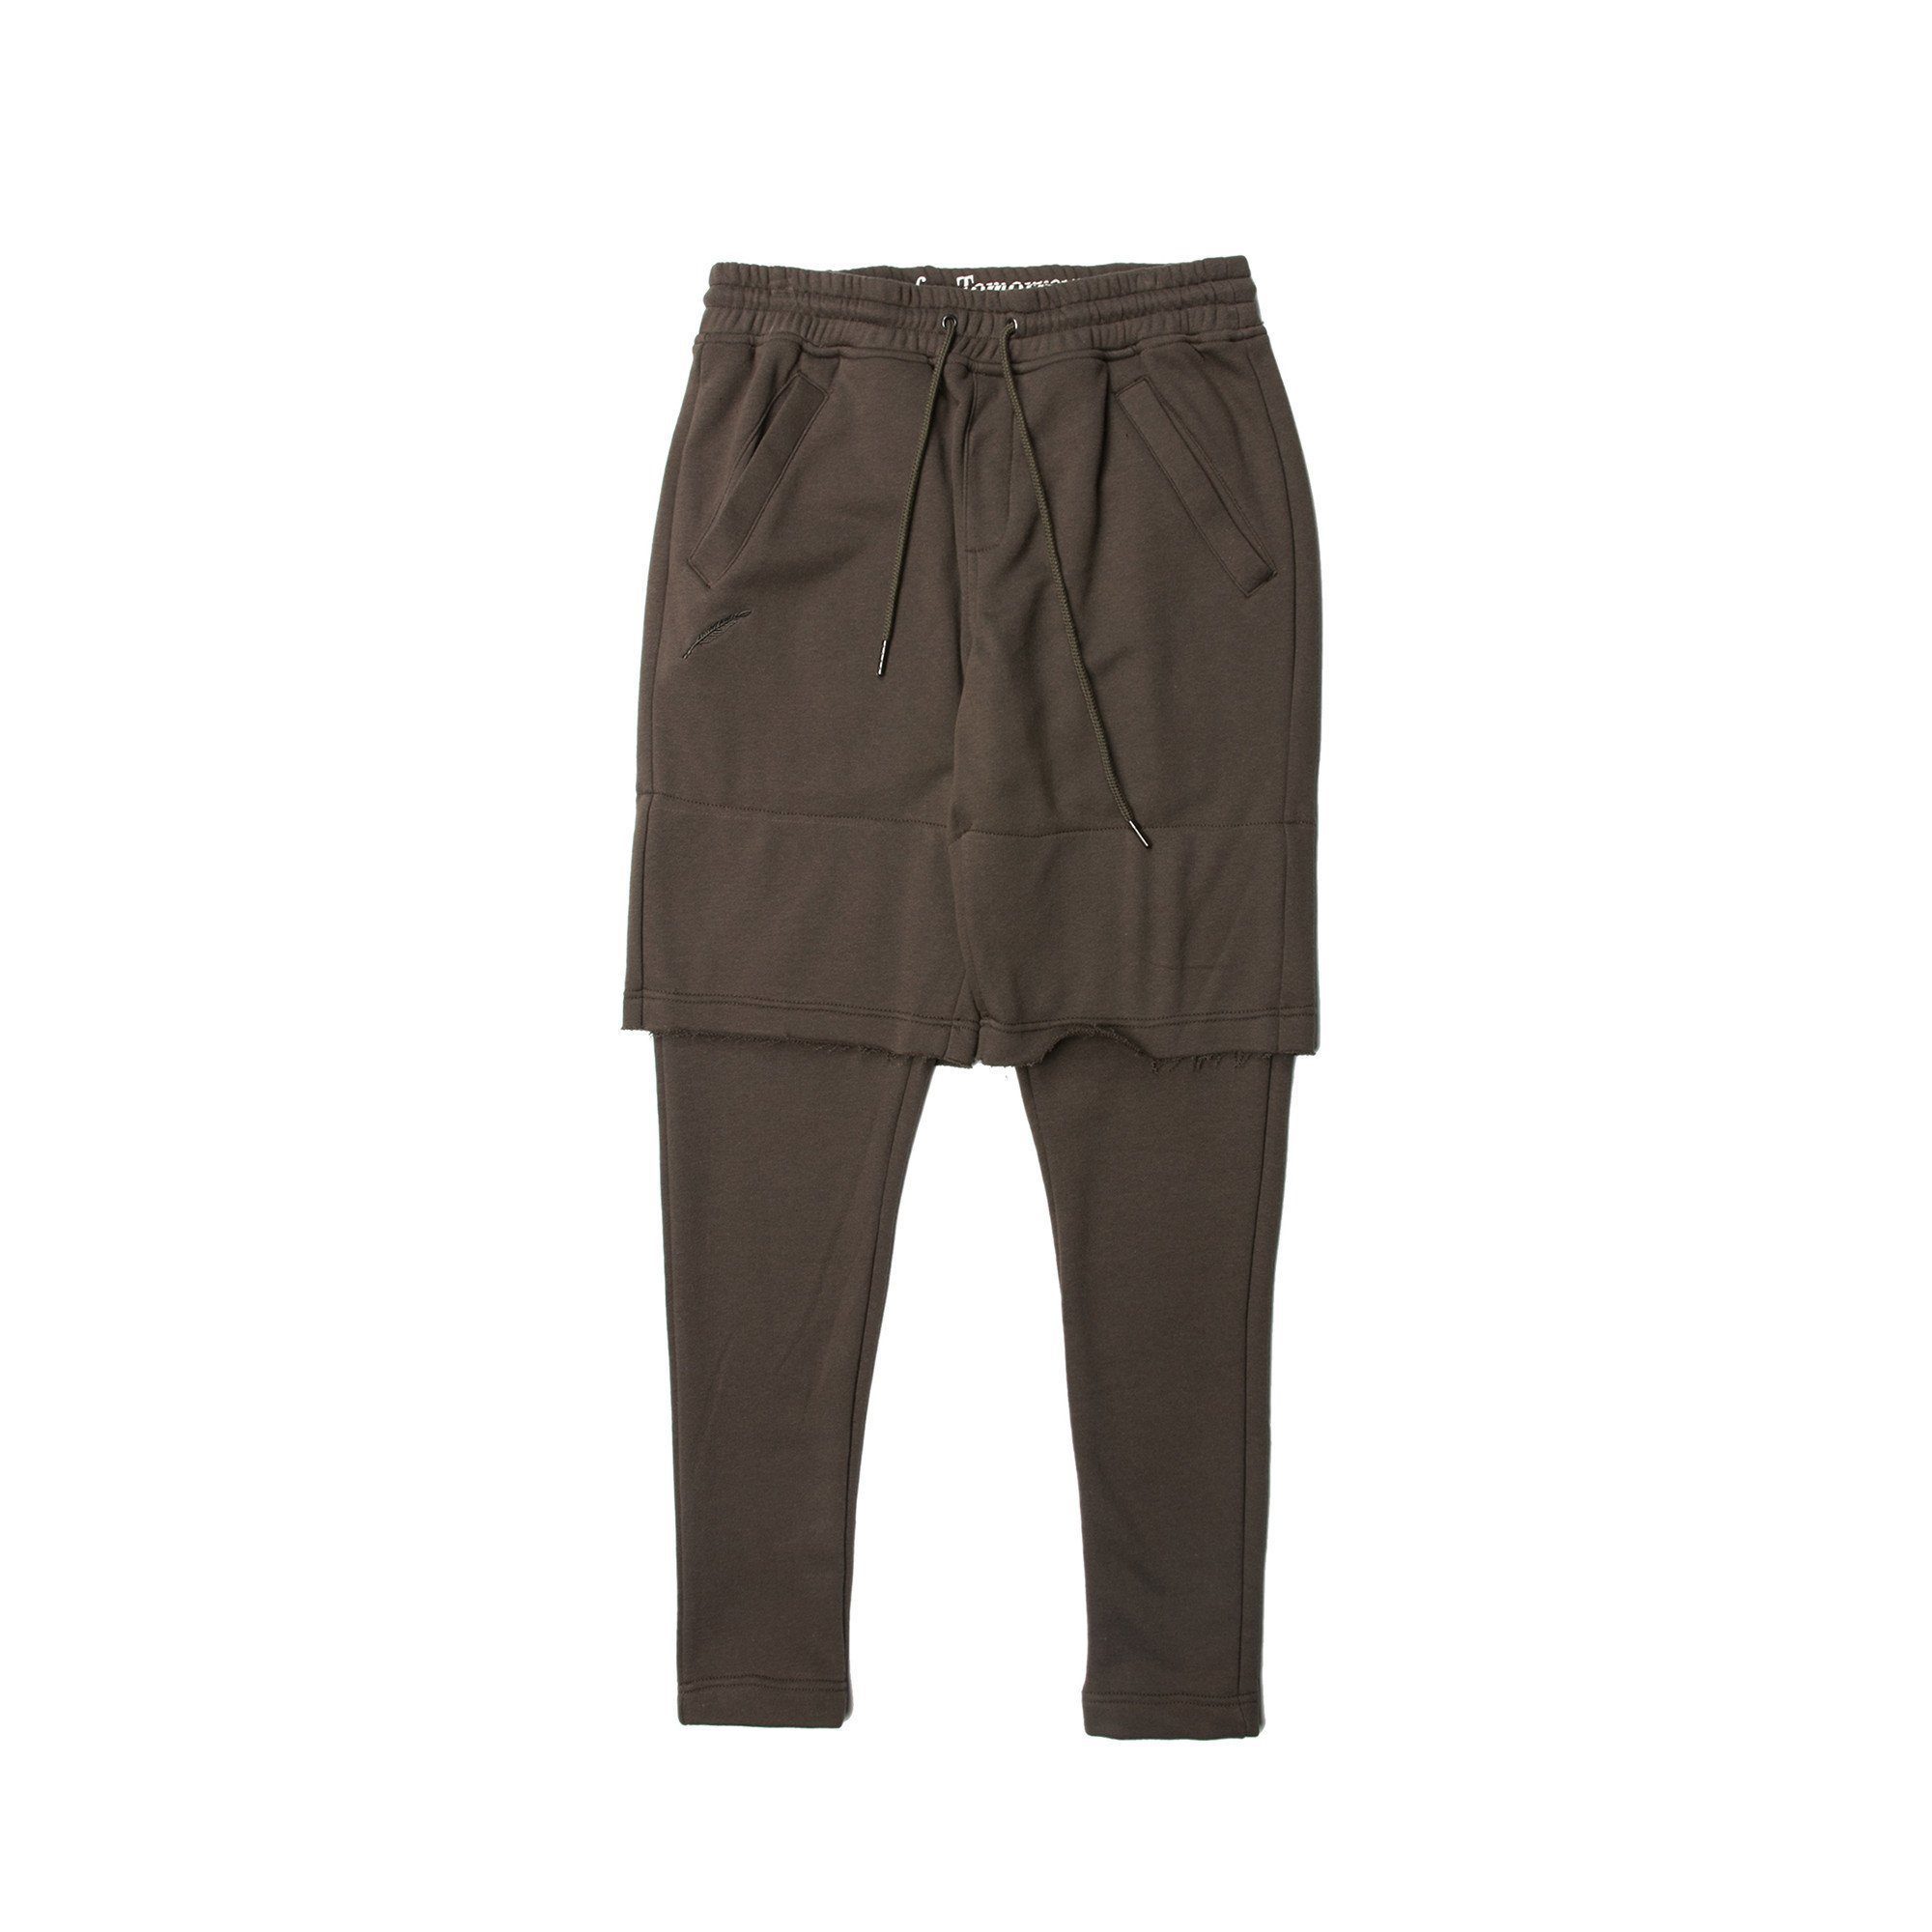 PANTS - Publish Braylon Bottoms Shorts And Legging Olive P1601150-OLV